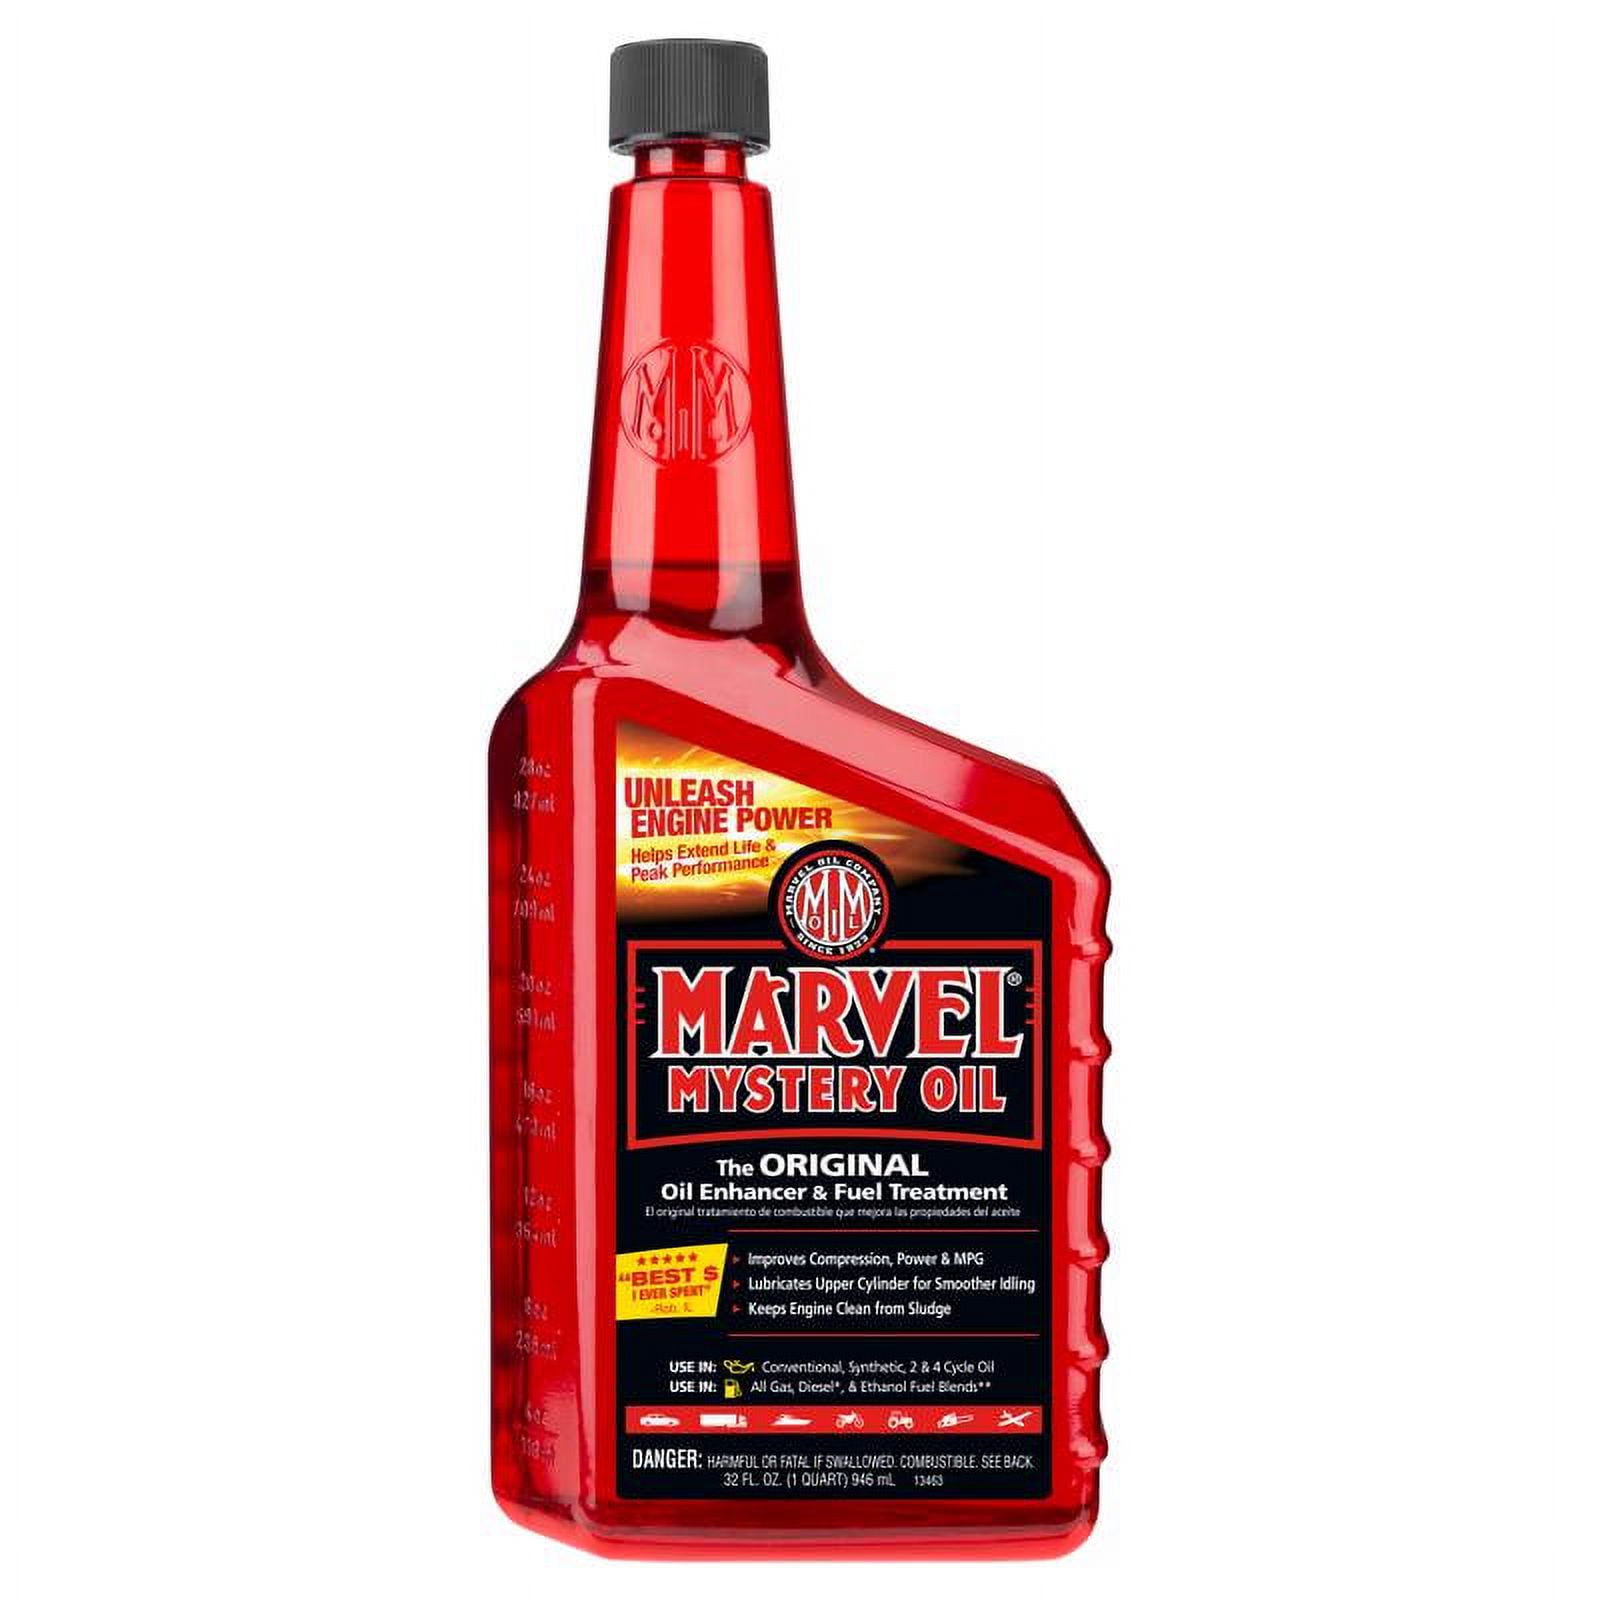 MAGIC In a Bottle - Full GALLON of Marvel Mystery Oil in Gas Tank Test 